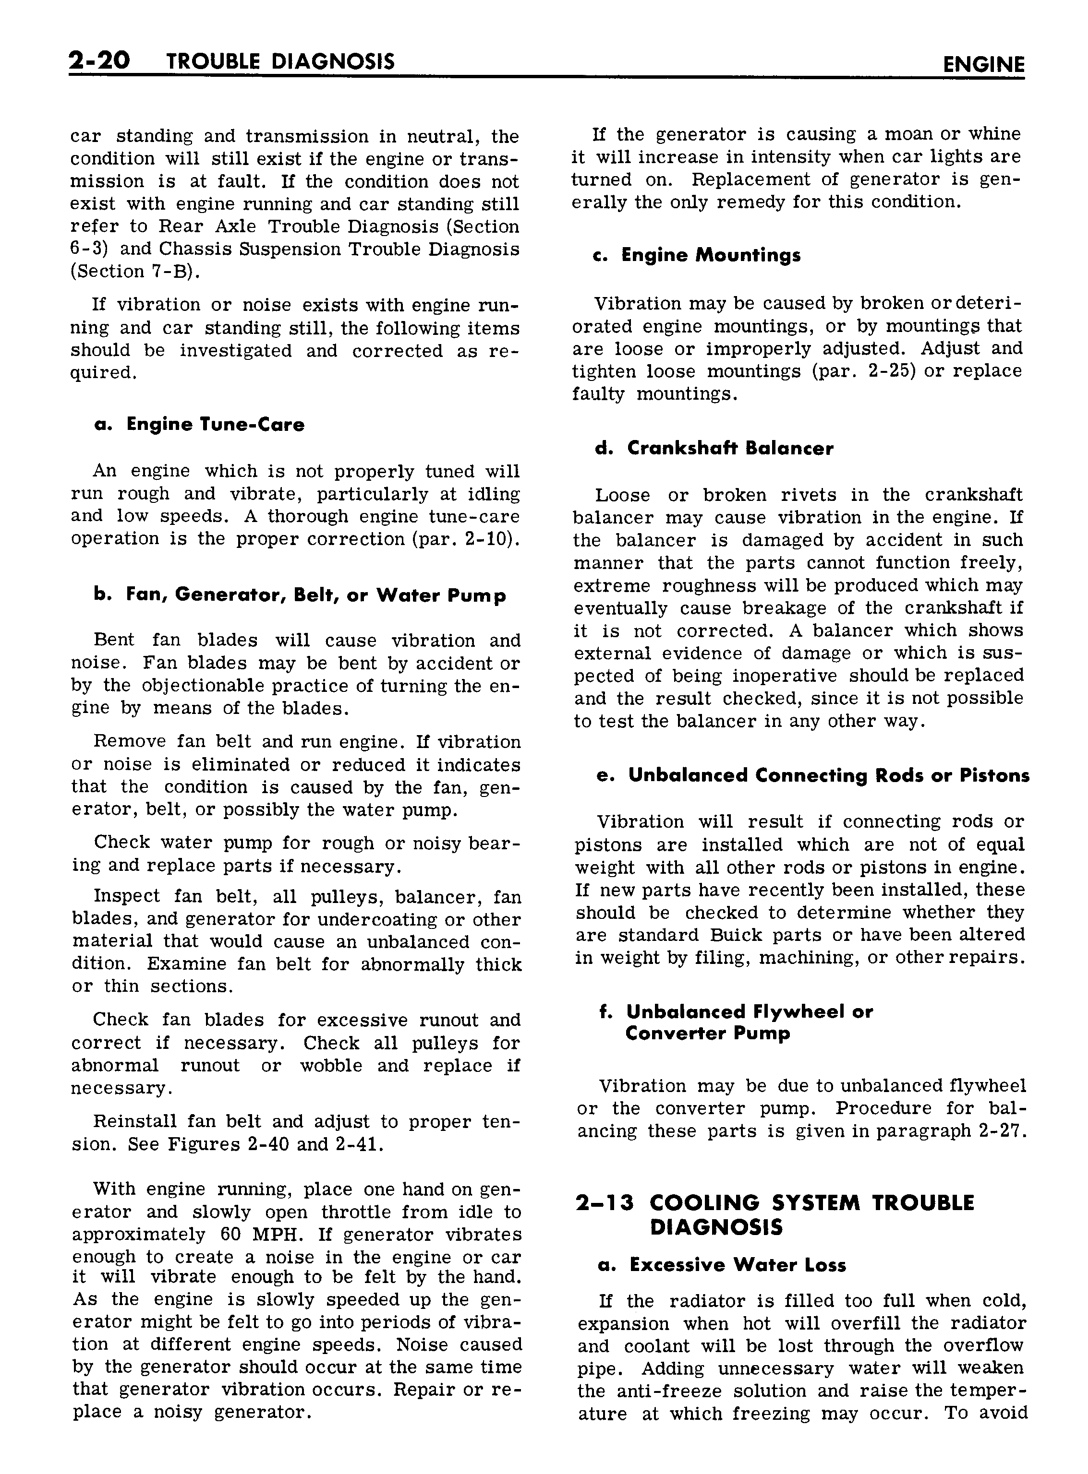 n_03 1961 Buick Shop Manual - Engine-020-020.jpg